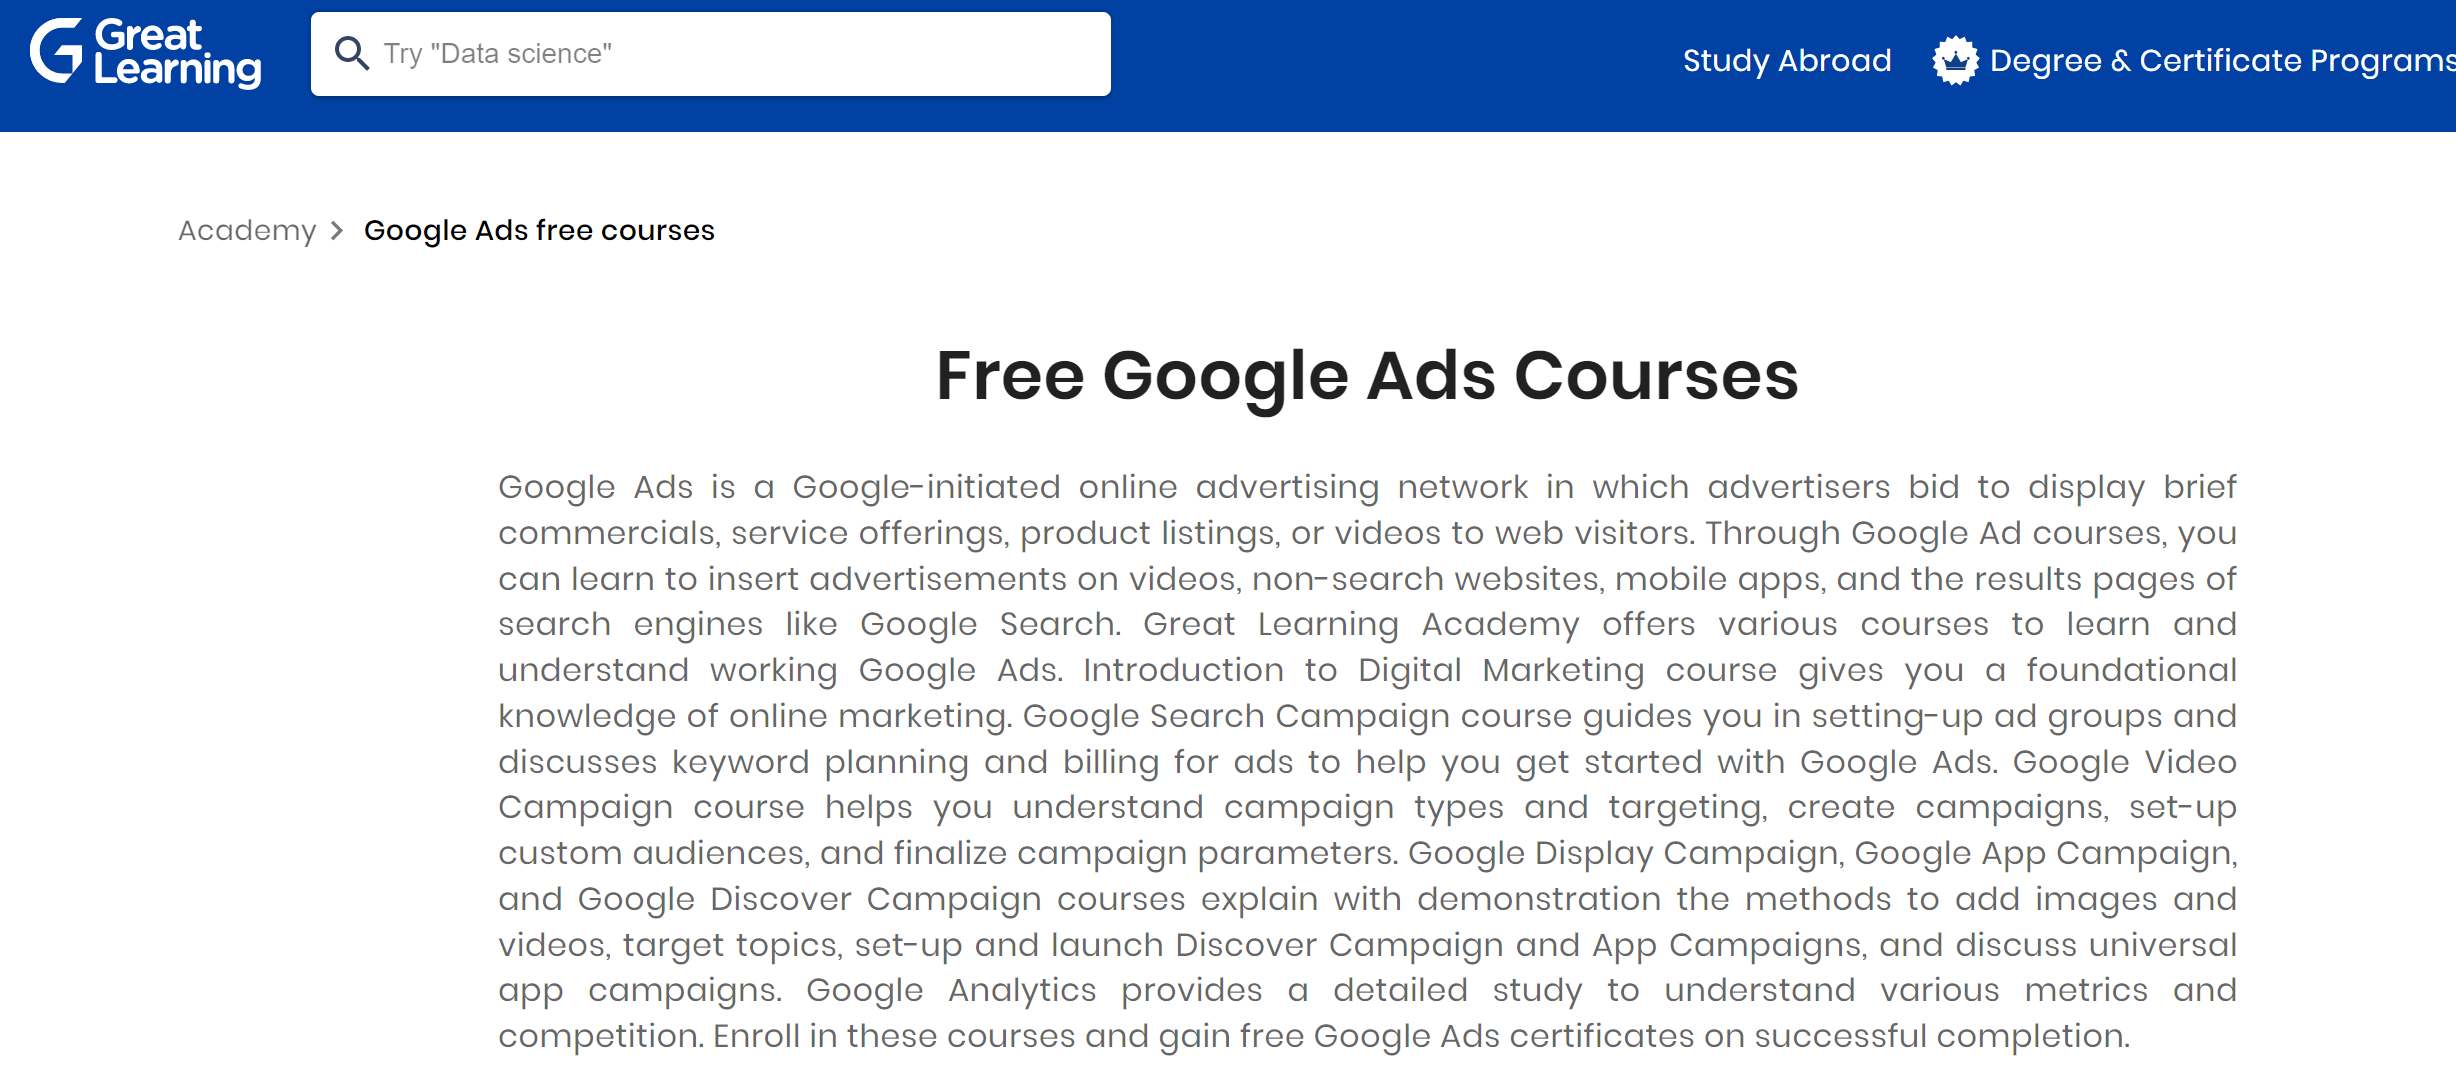 Free Google Ads Courses